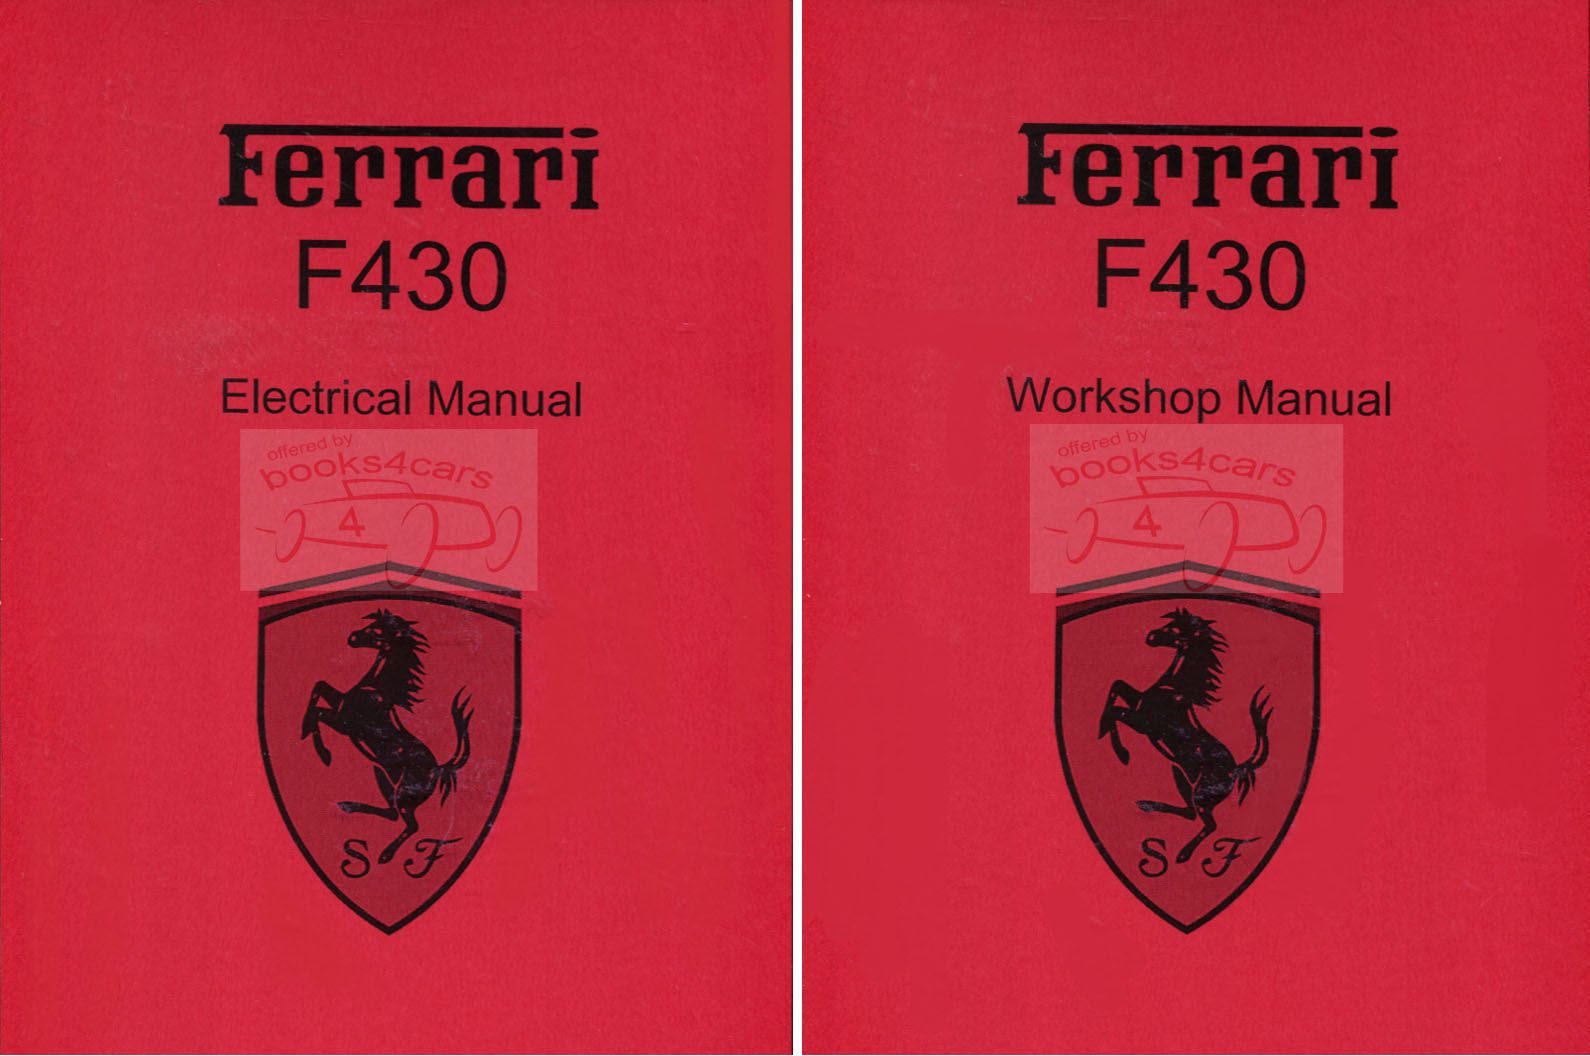 04-08 F430 Workshop Shop Service repair Manual by Ferrari 2 volume set in Italian English French & German